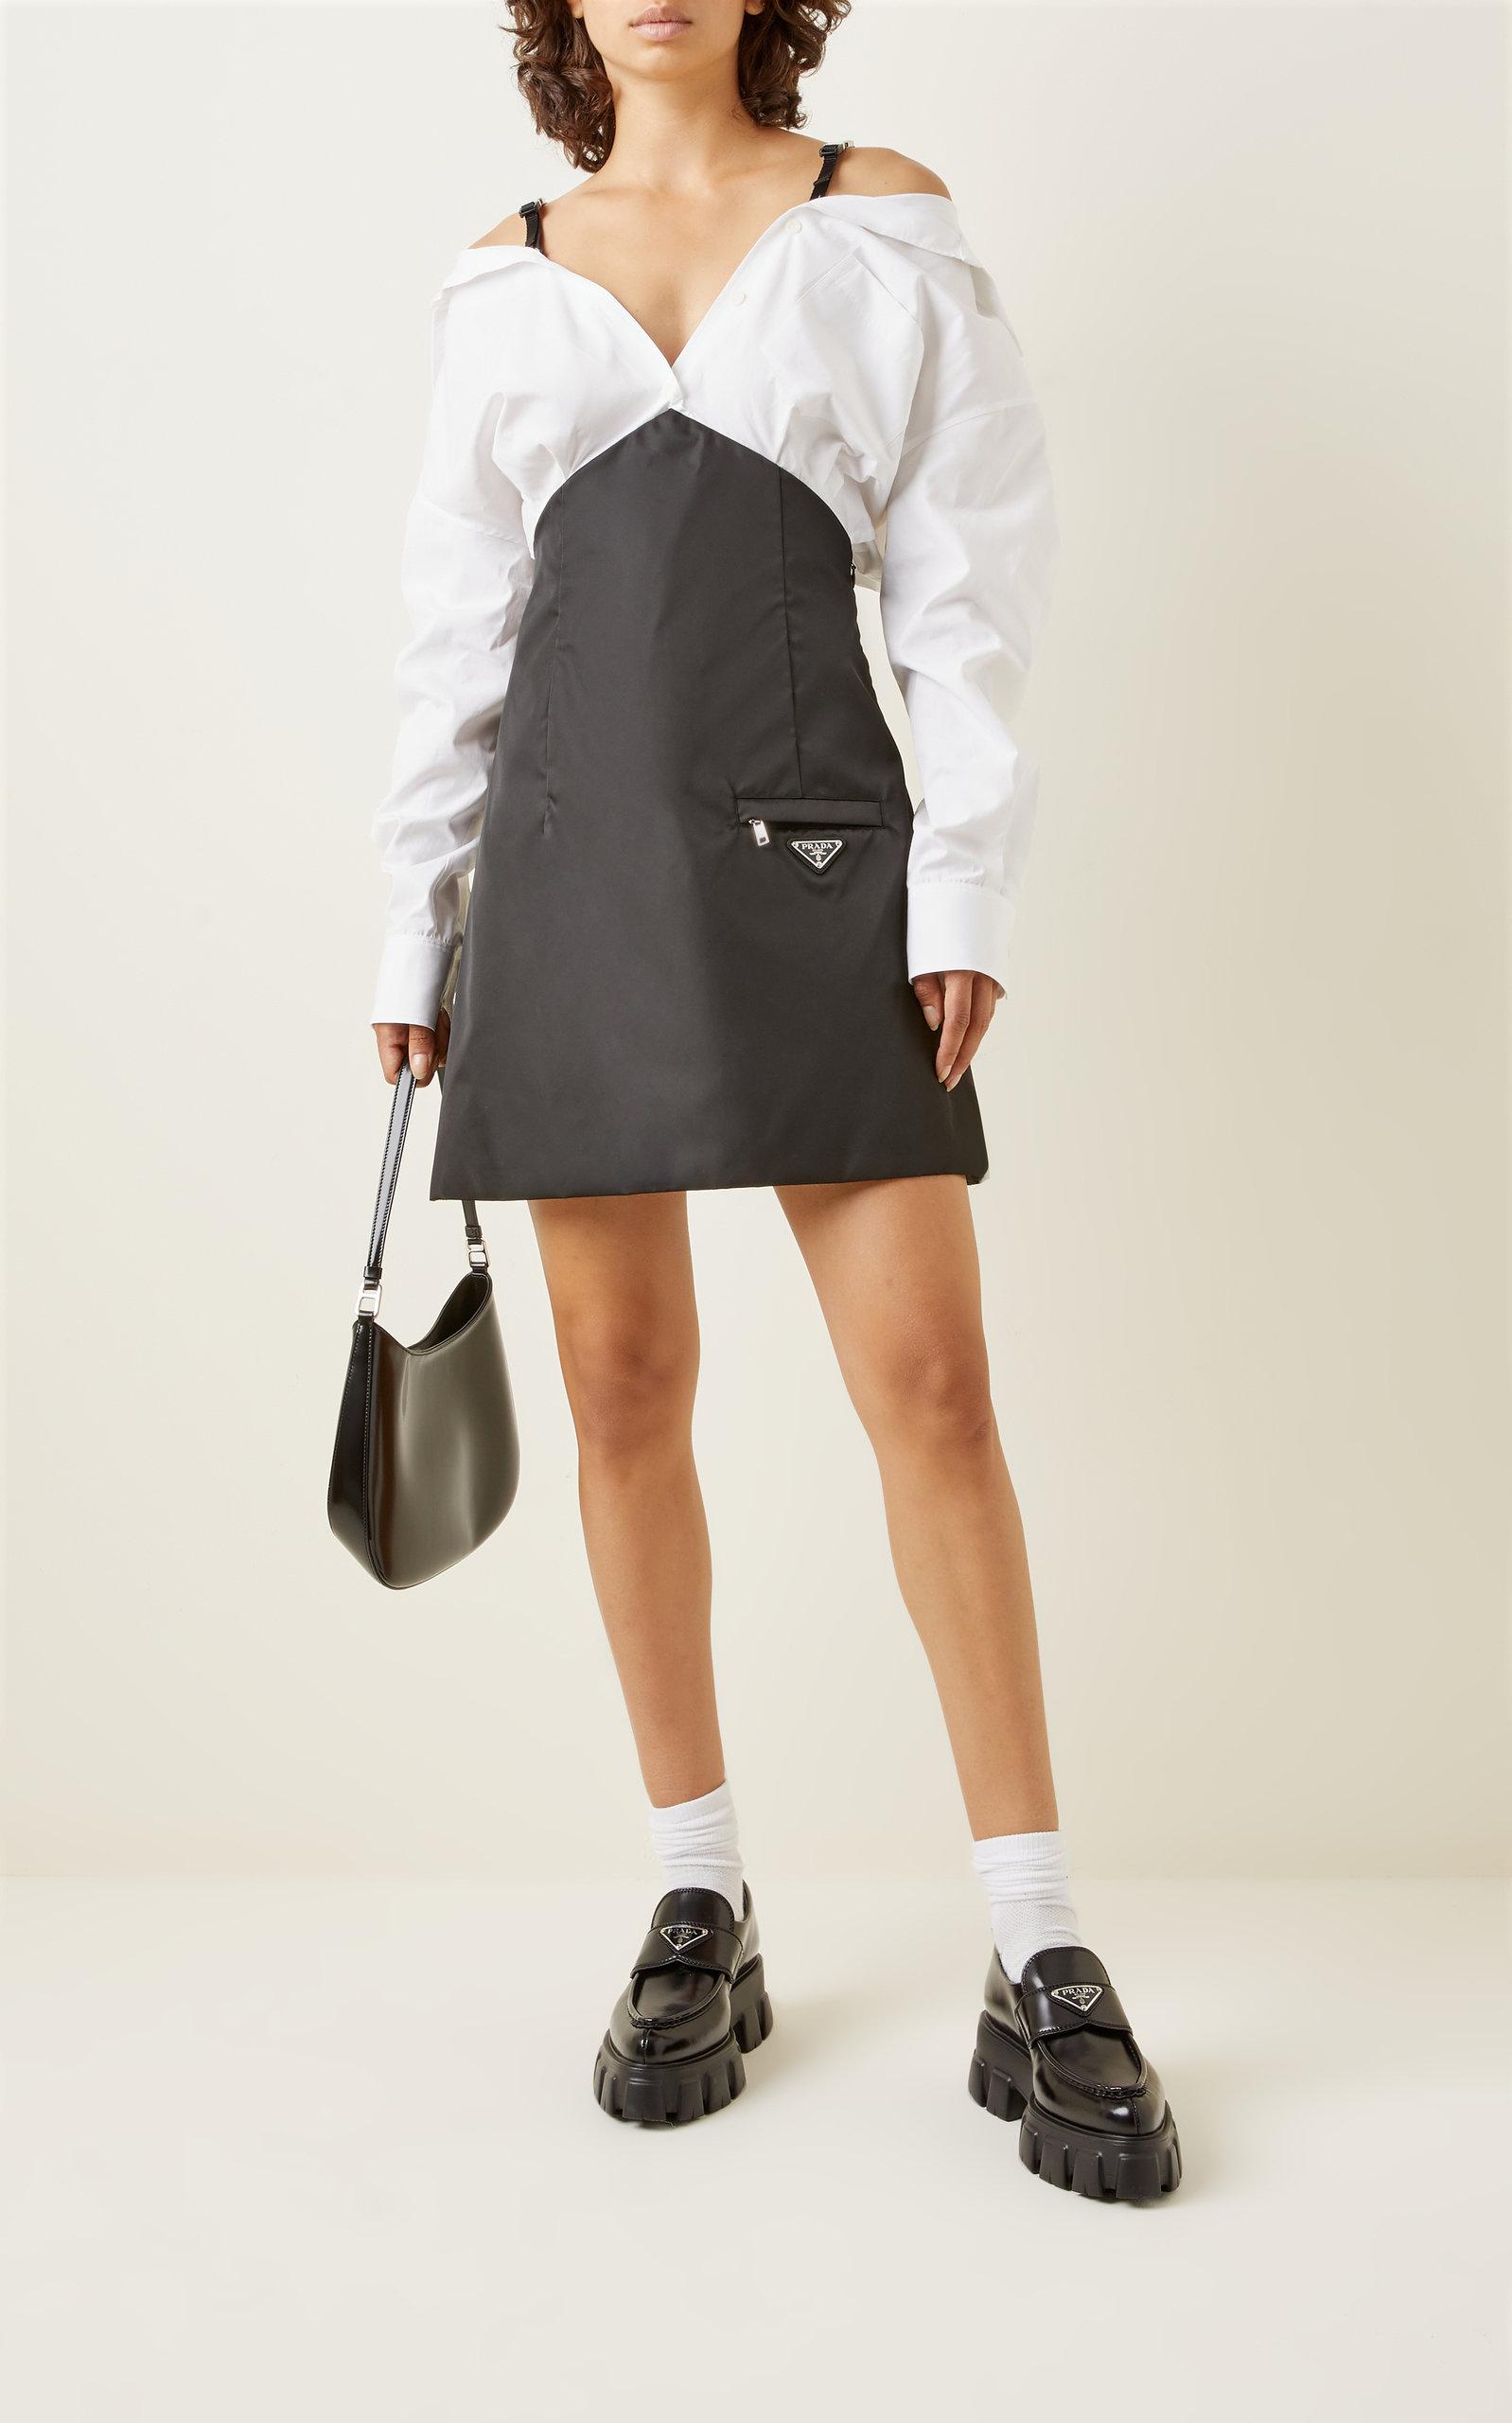 https://cdna.lystit.com/photos/modaoperandi/466745be/prada-blackwhite-Draped-Cotton-And-Nylon-Mini-Dress.jpeg